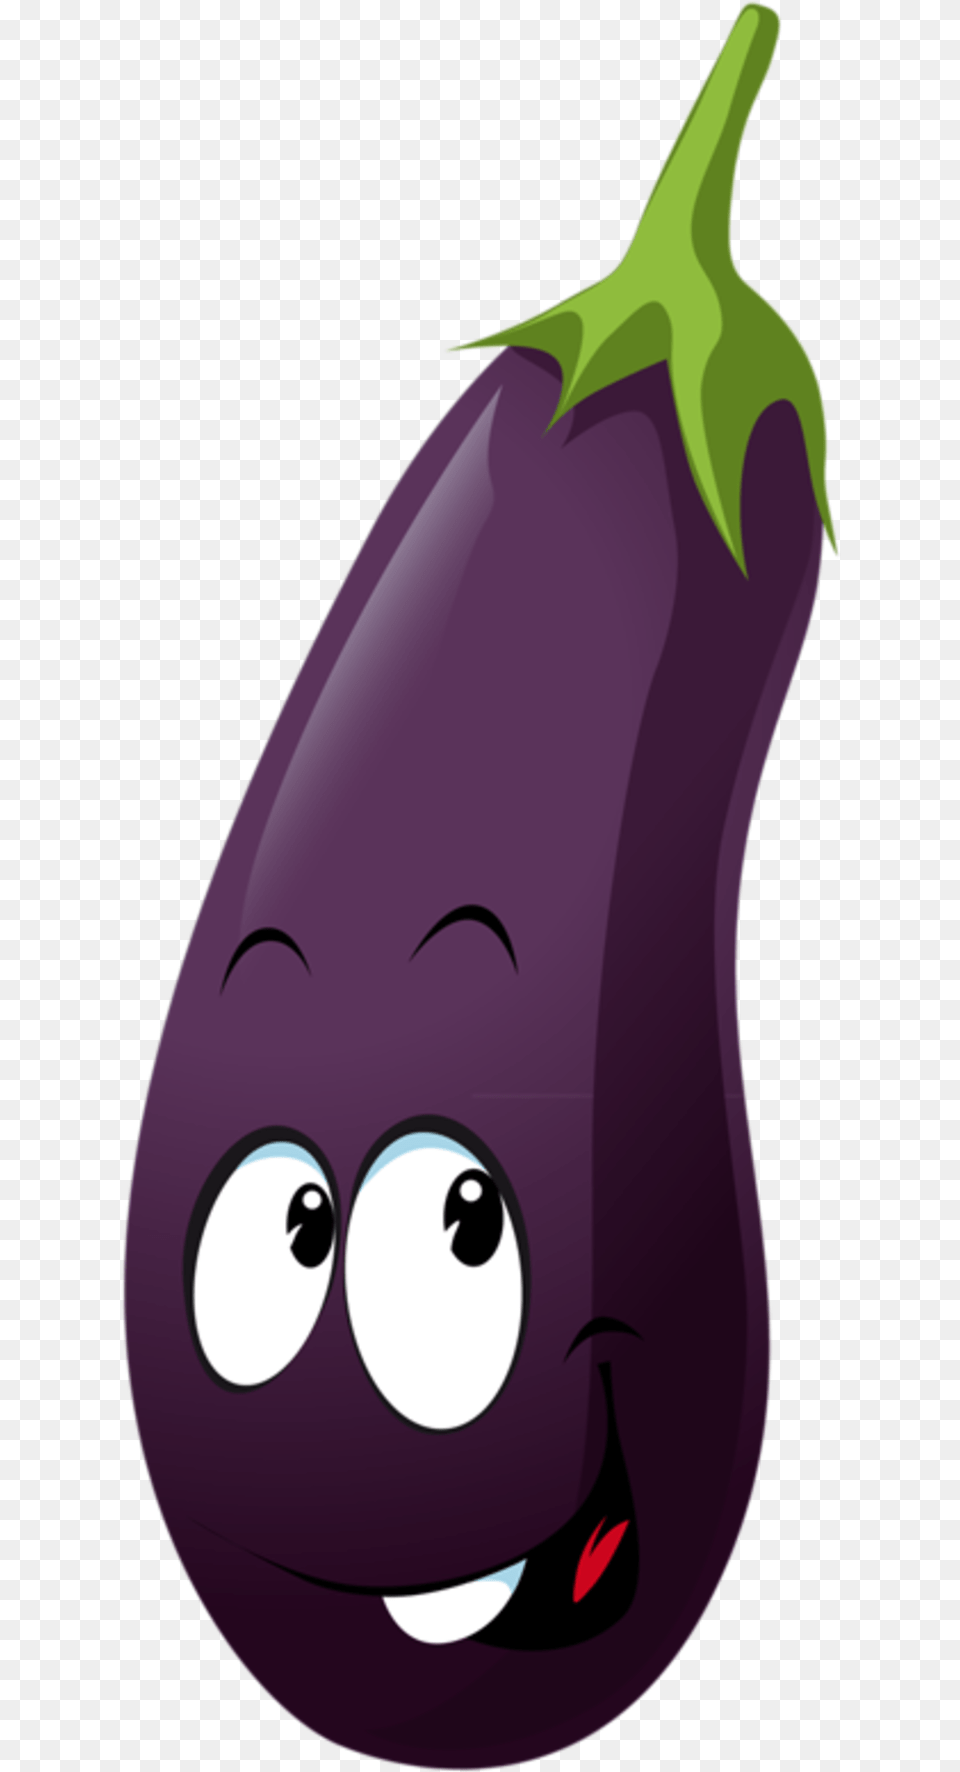 Eggplant Clipart Individual Fruit Vegetable Cartoon Aubergine, Food, Produce, Plant, Person Png Image